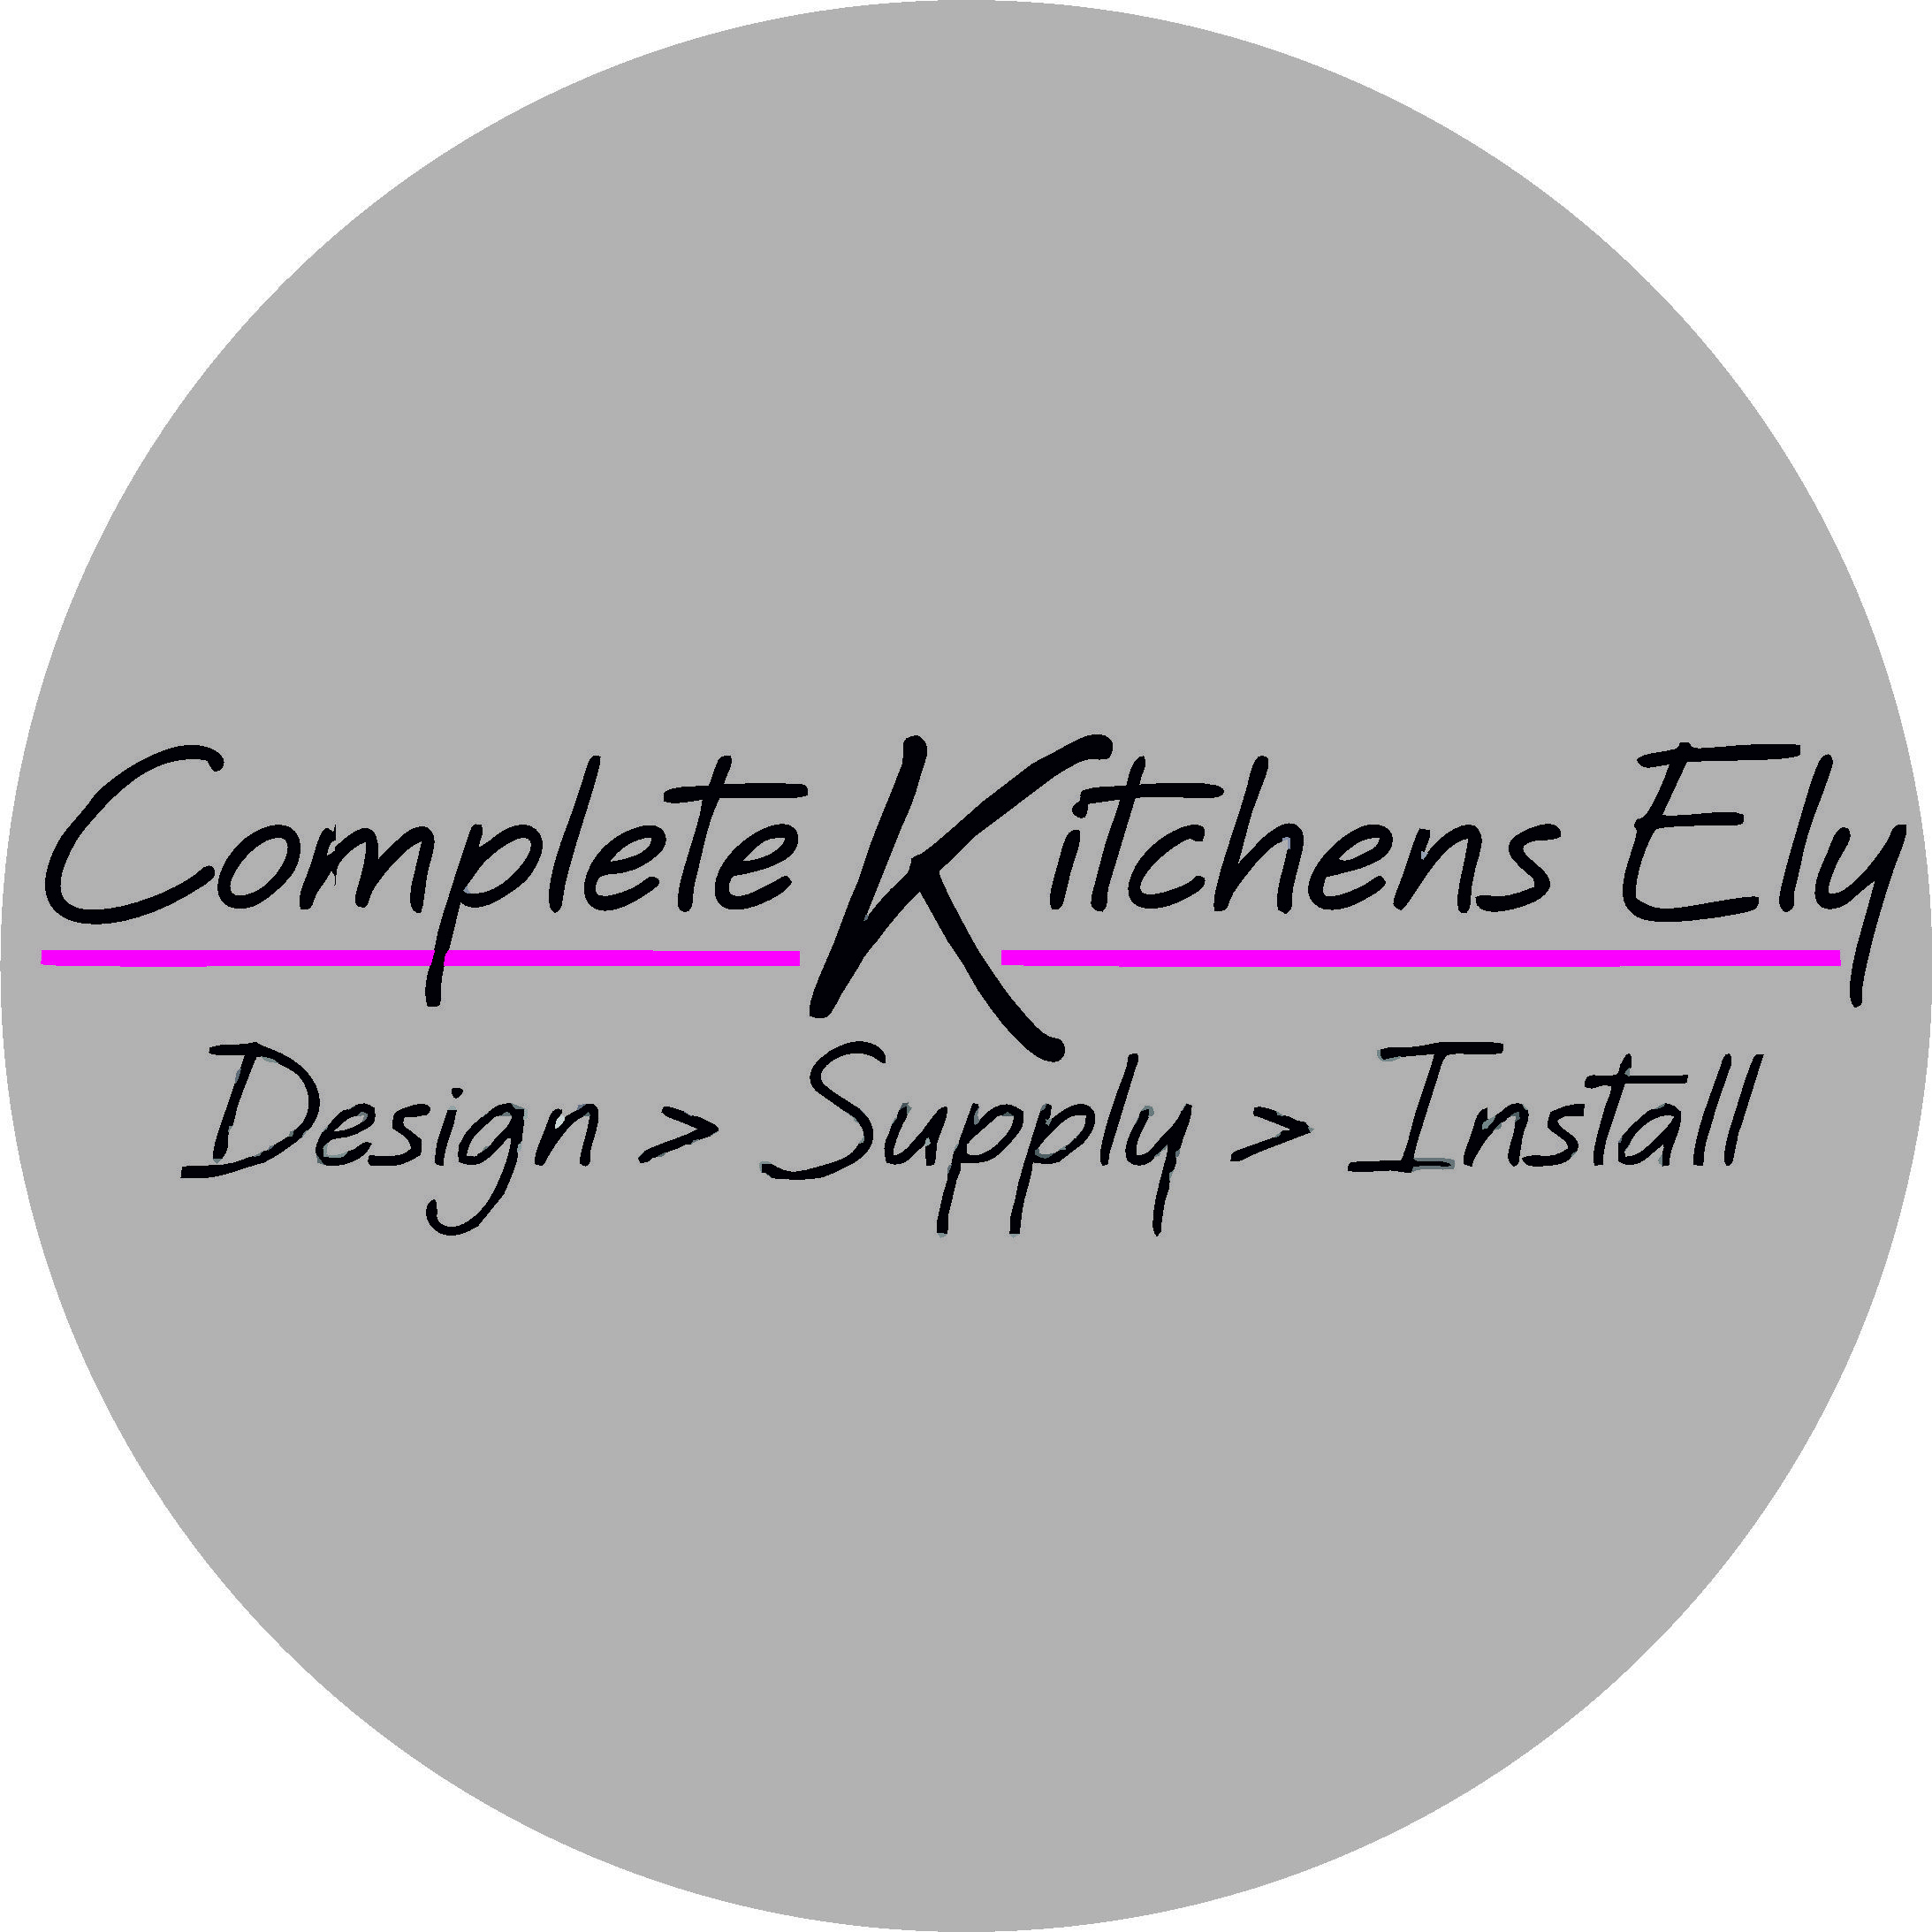 Paul Smart- Complete Kitchens Ely Ltd